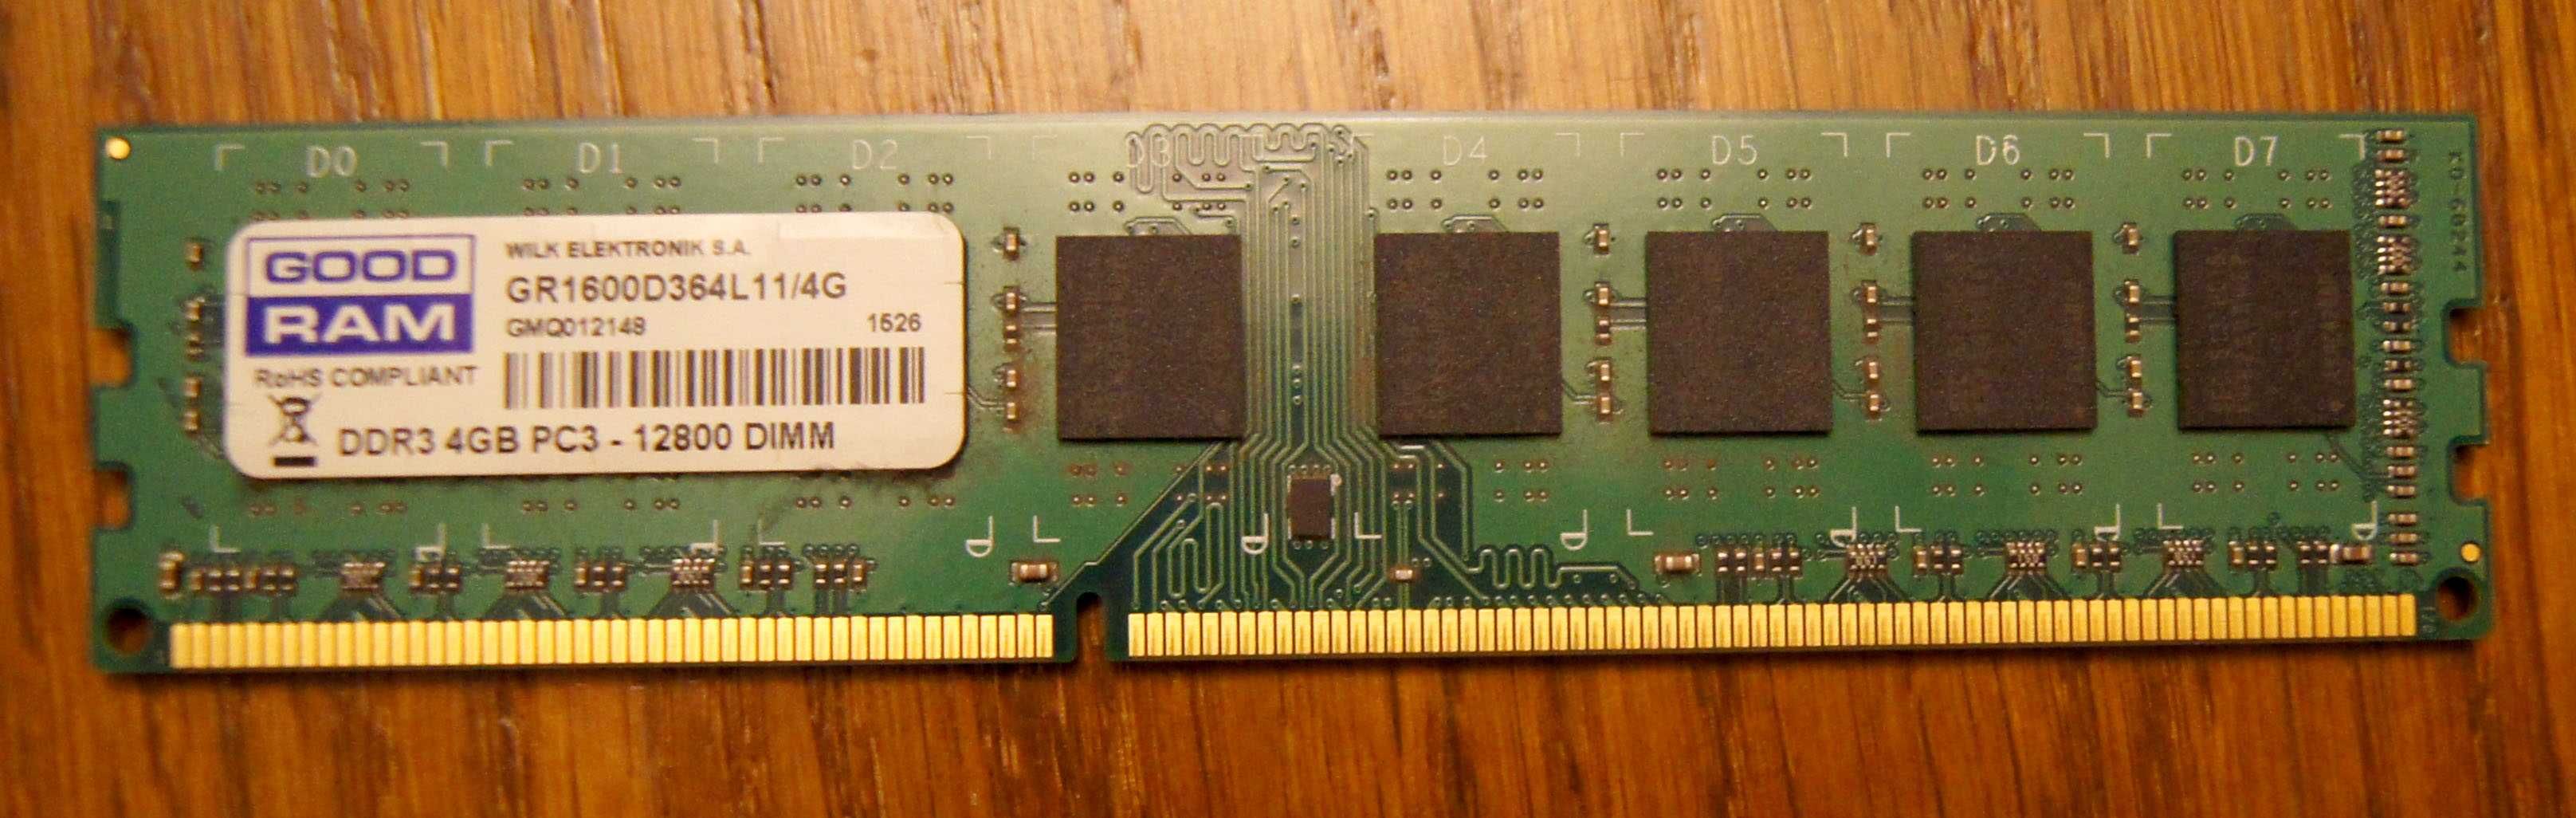 Pamięć RAM Goodram 4GB 1600MHz CL11 GR1600D364L11/4G